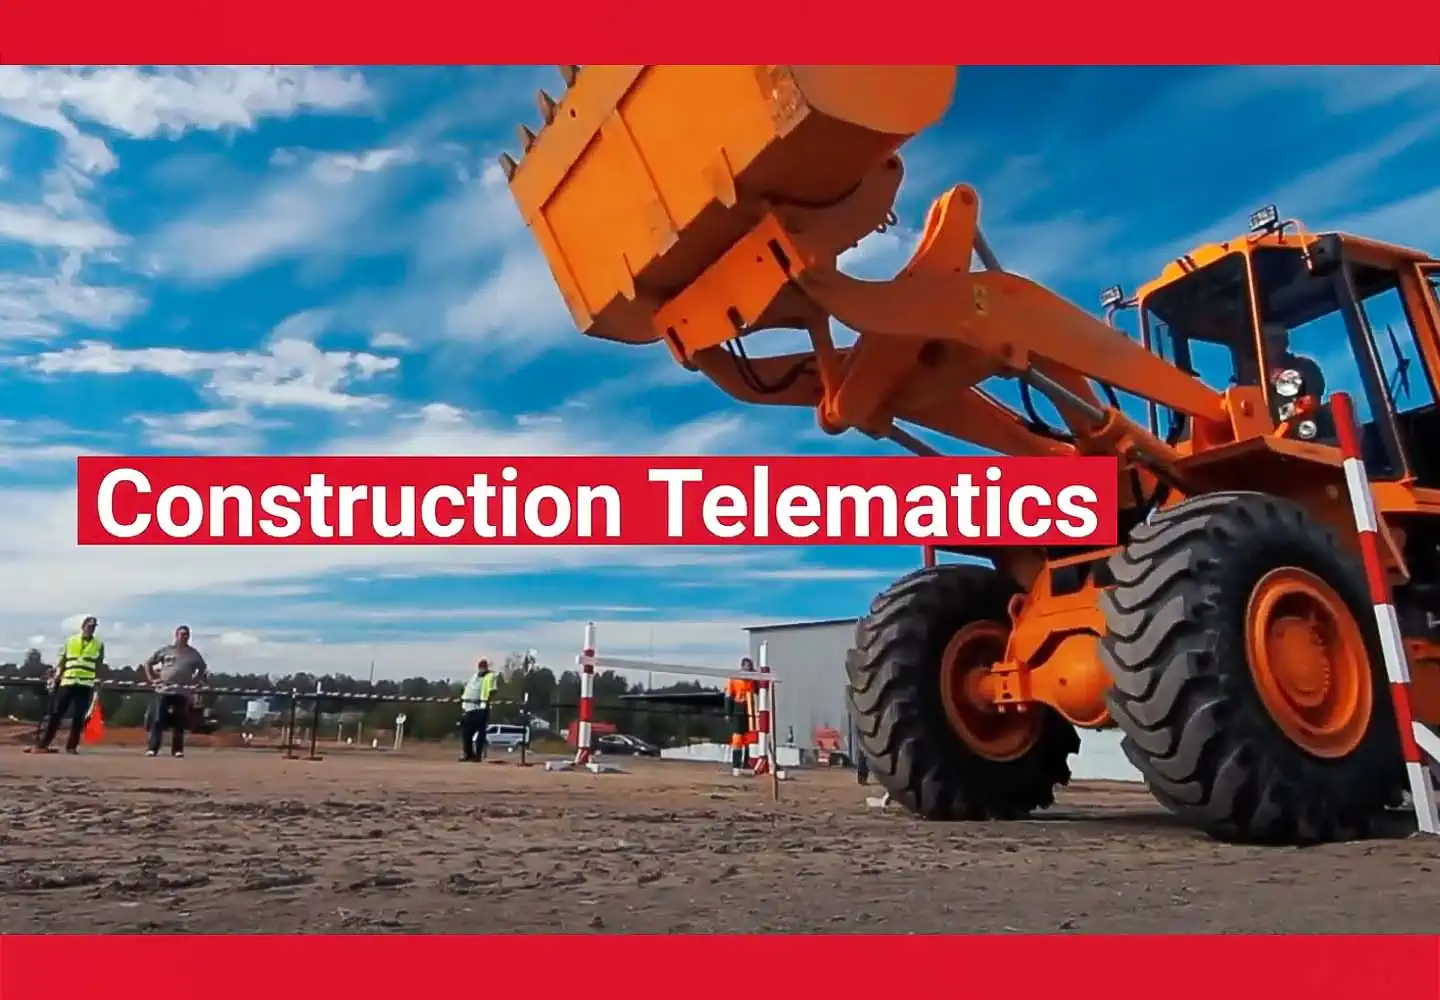 Construction Telematics